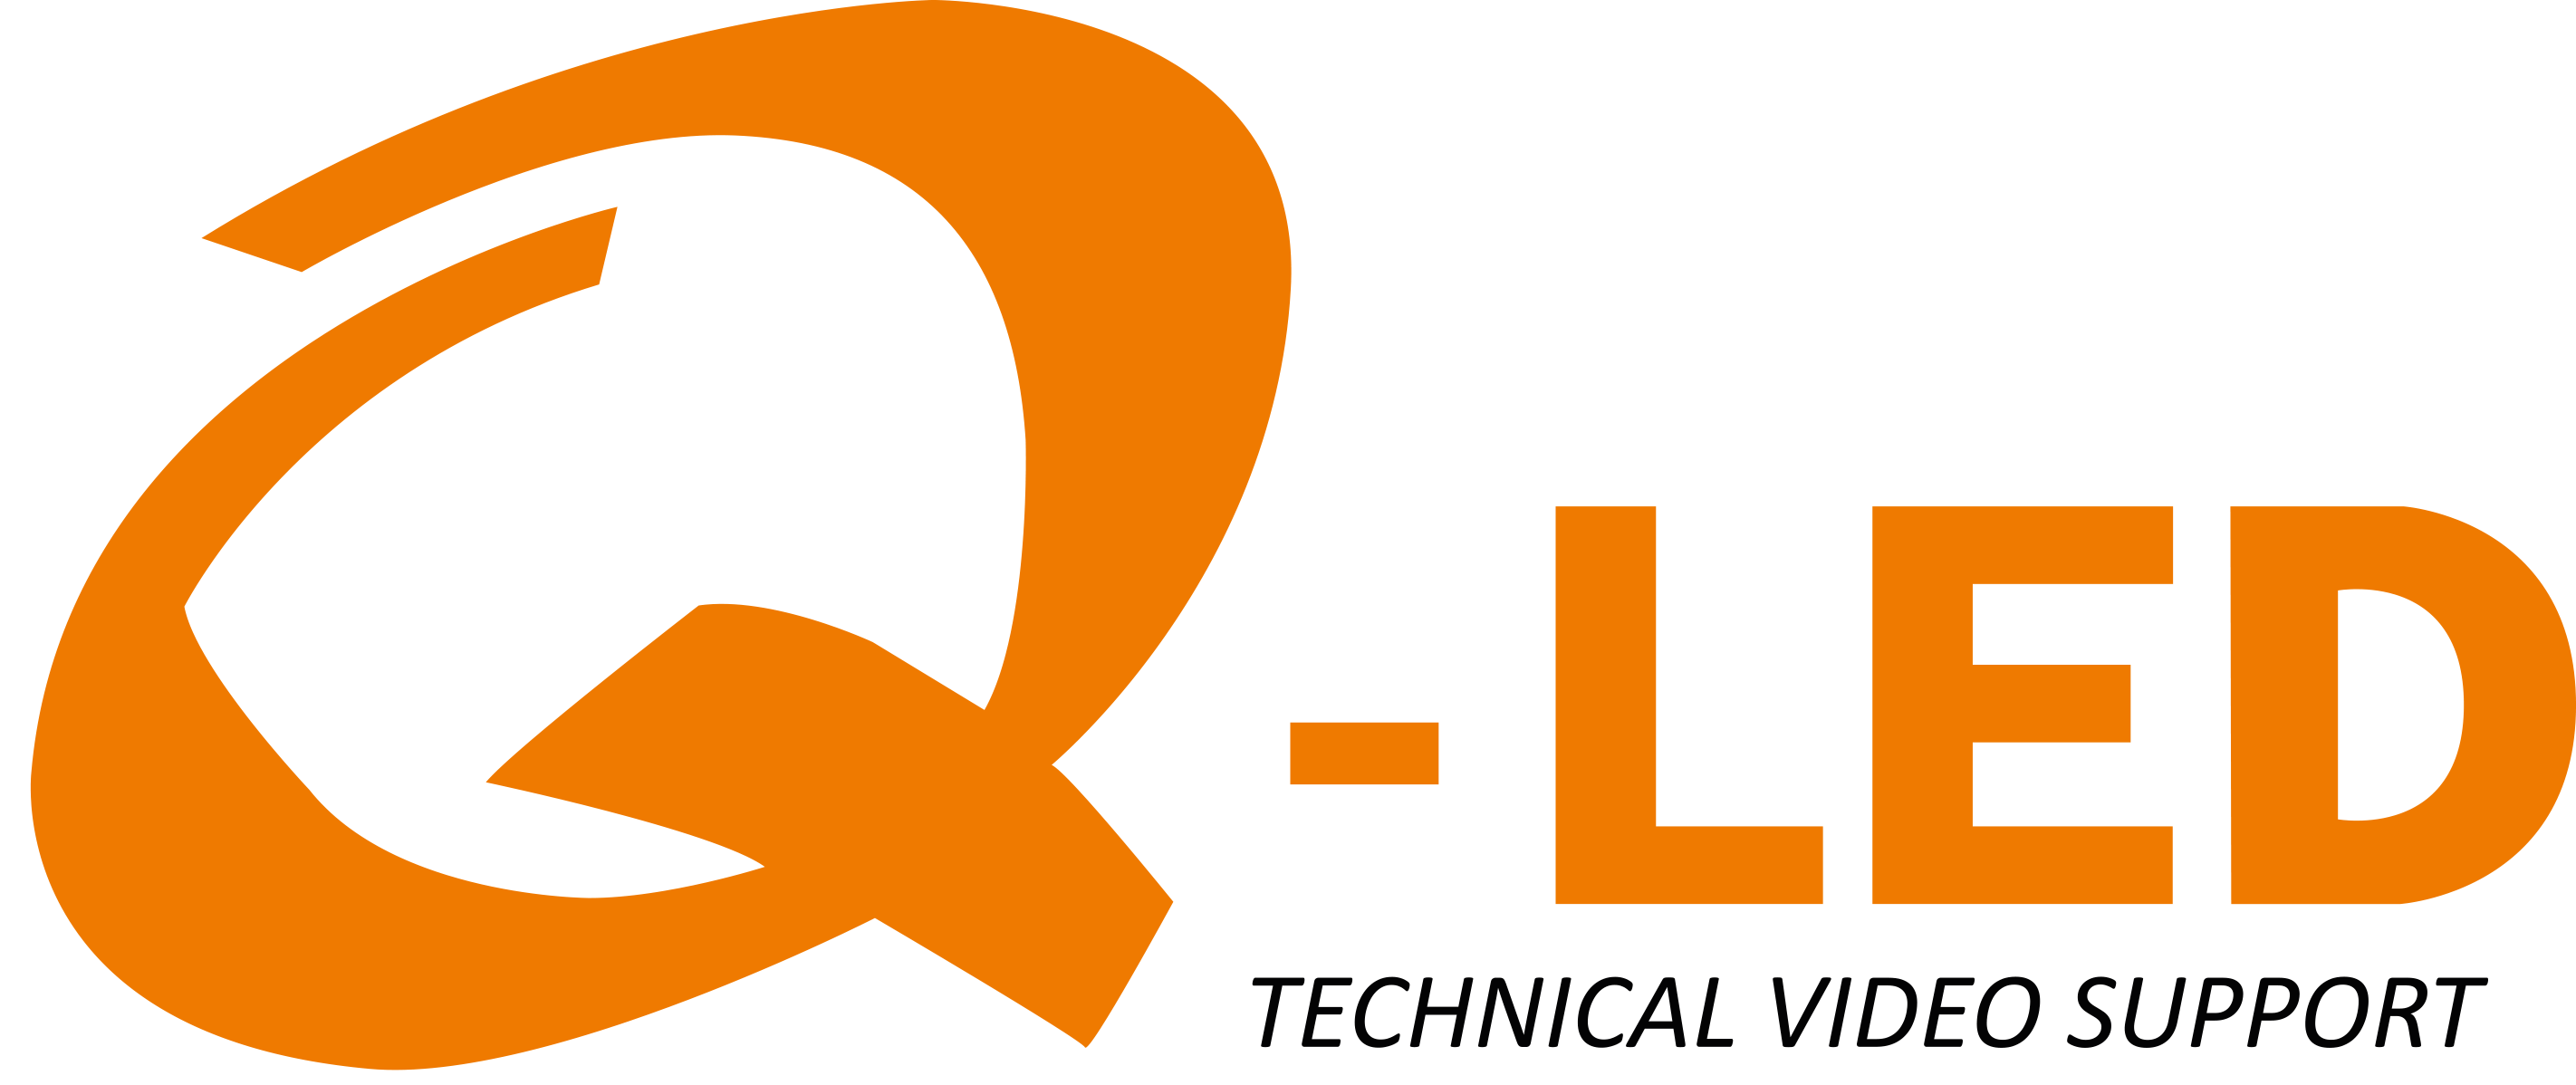 Q-Led Logo